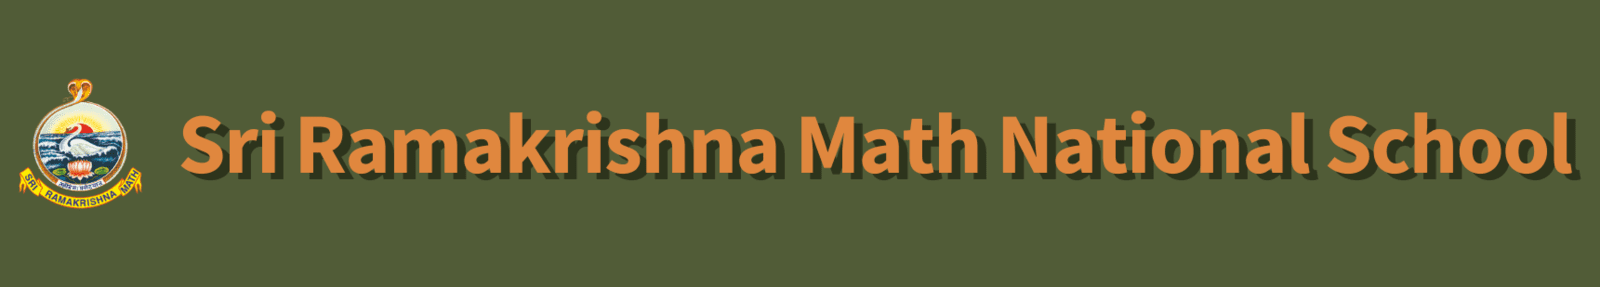 Sri Ramakrishna Math National School